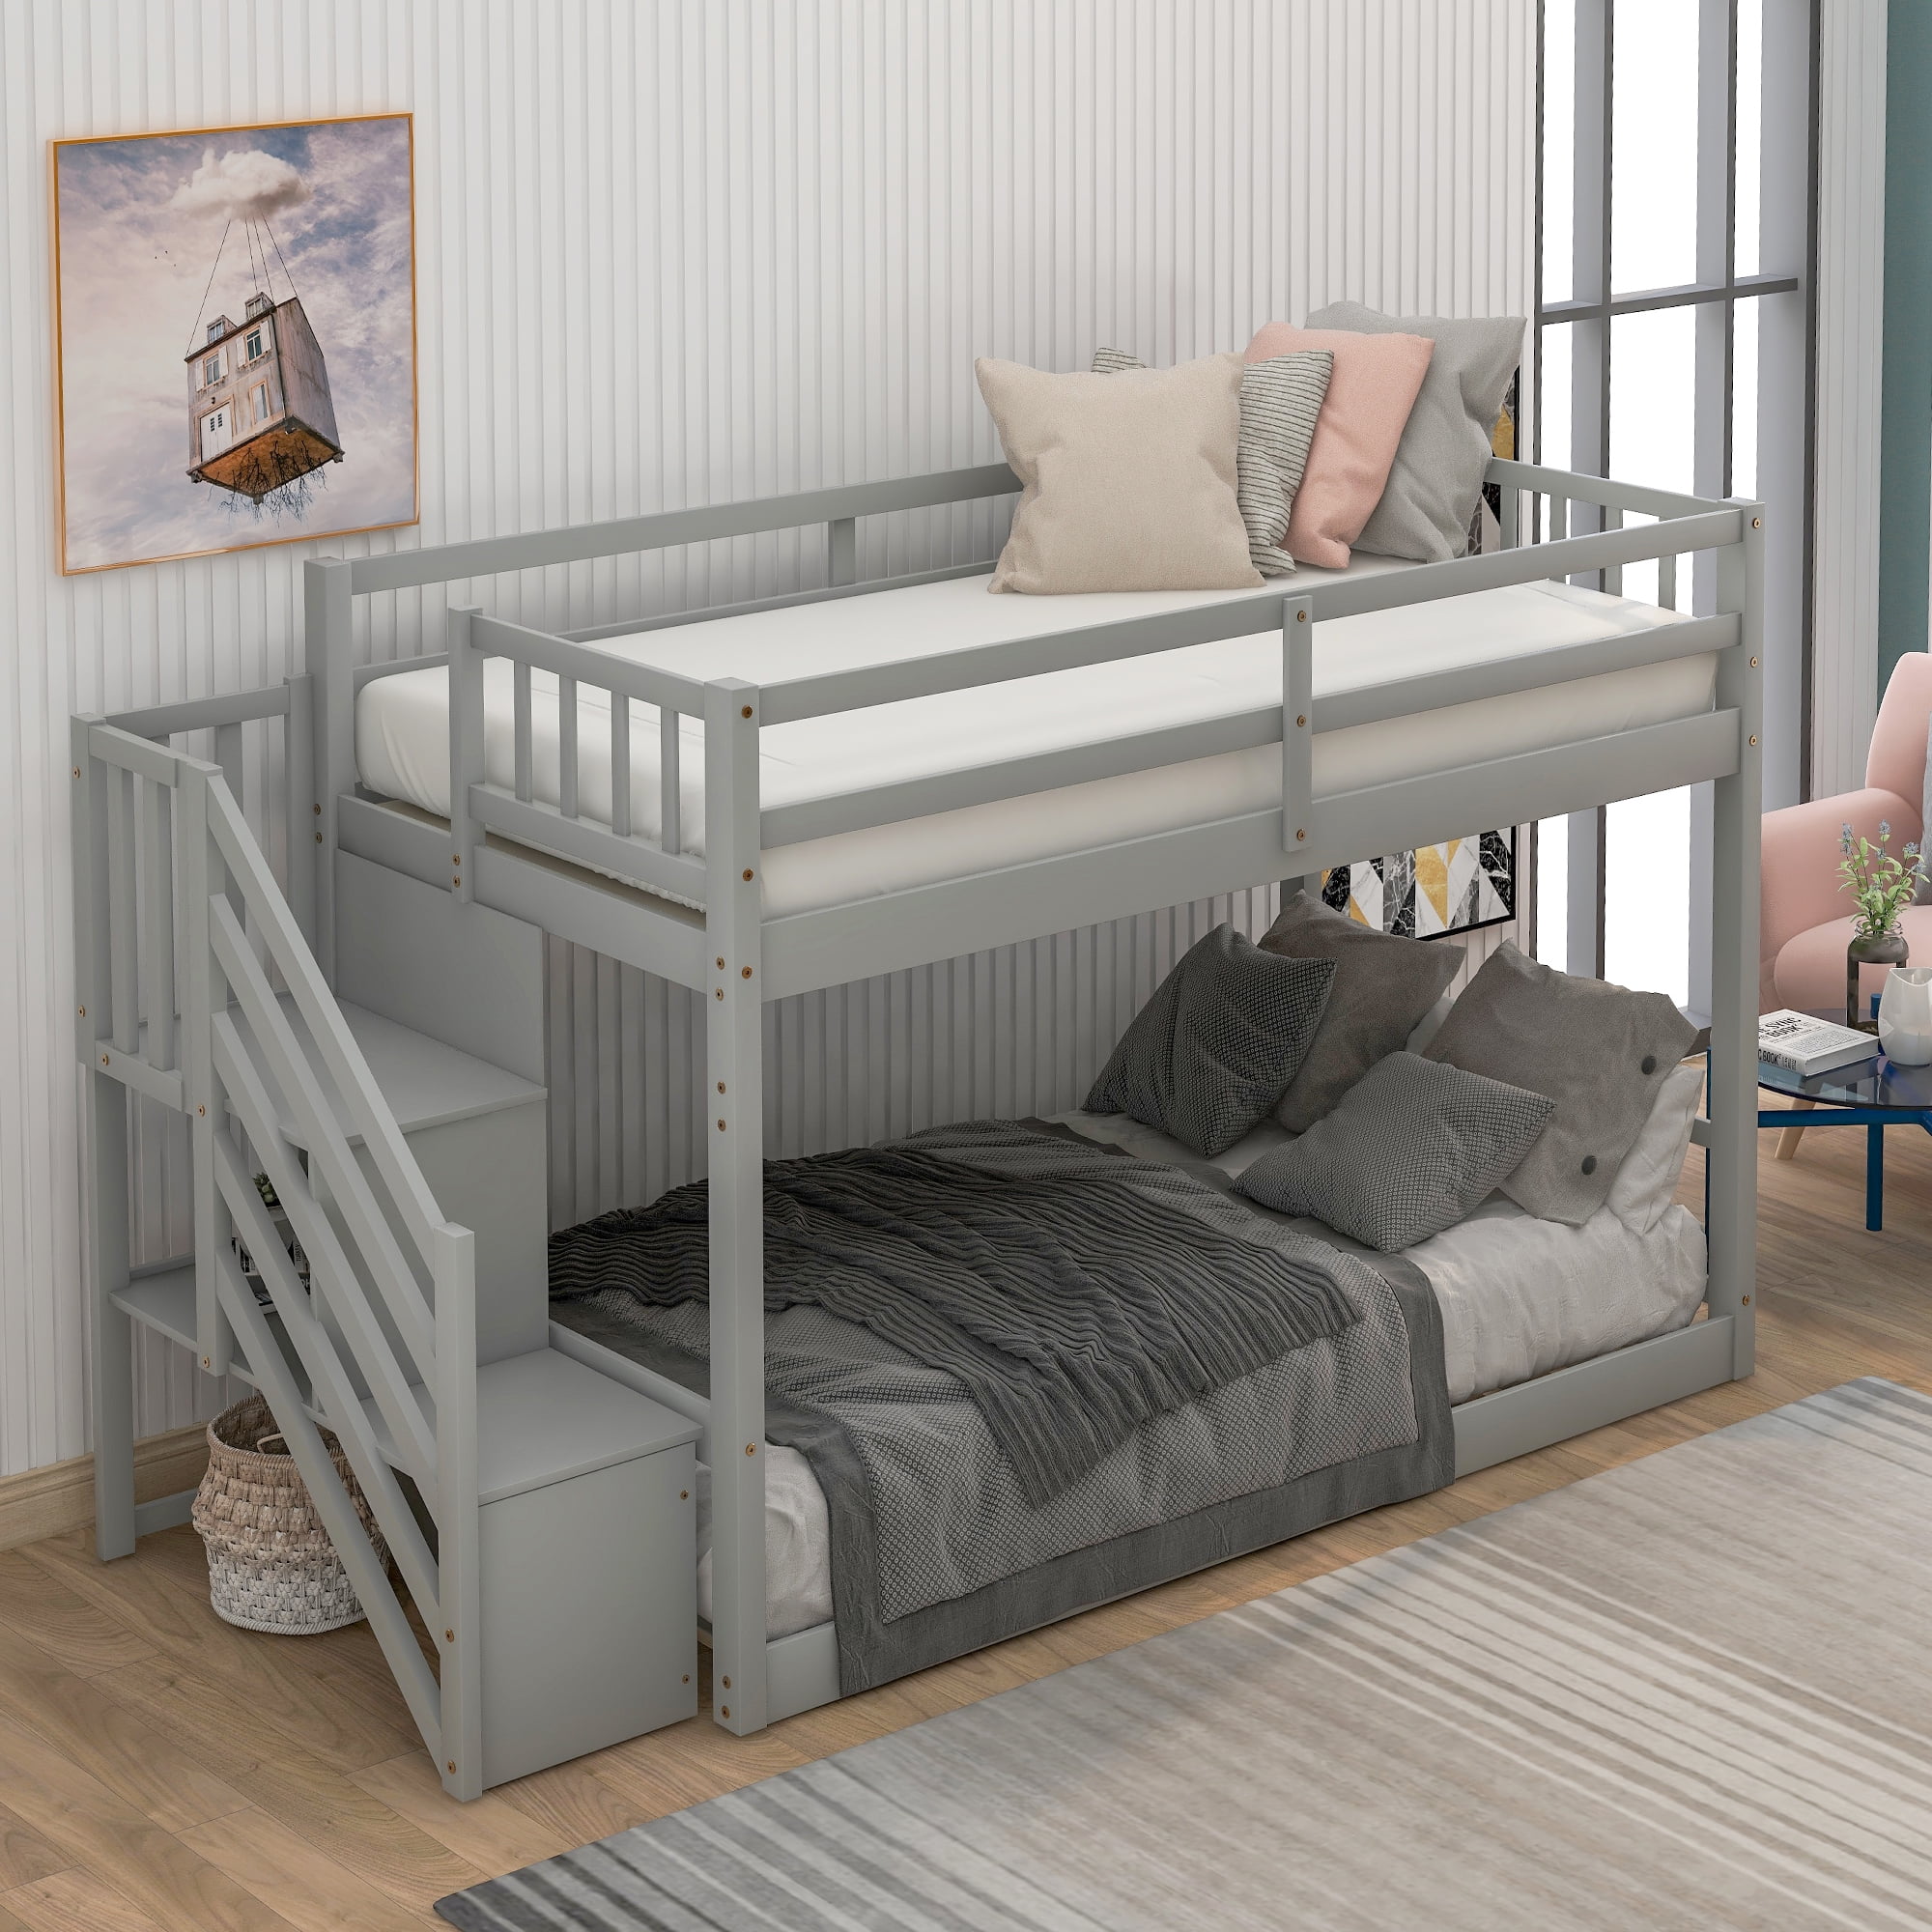 Euroco Wood Twin Over Floor Bunk, Crib And Bunk Bed Combo